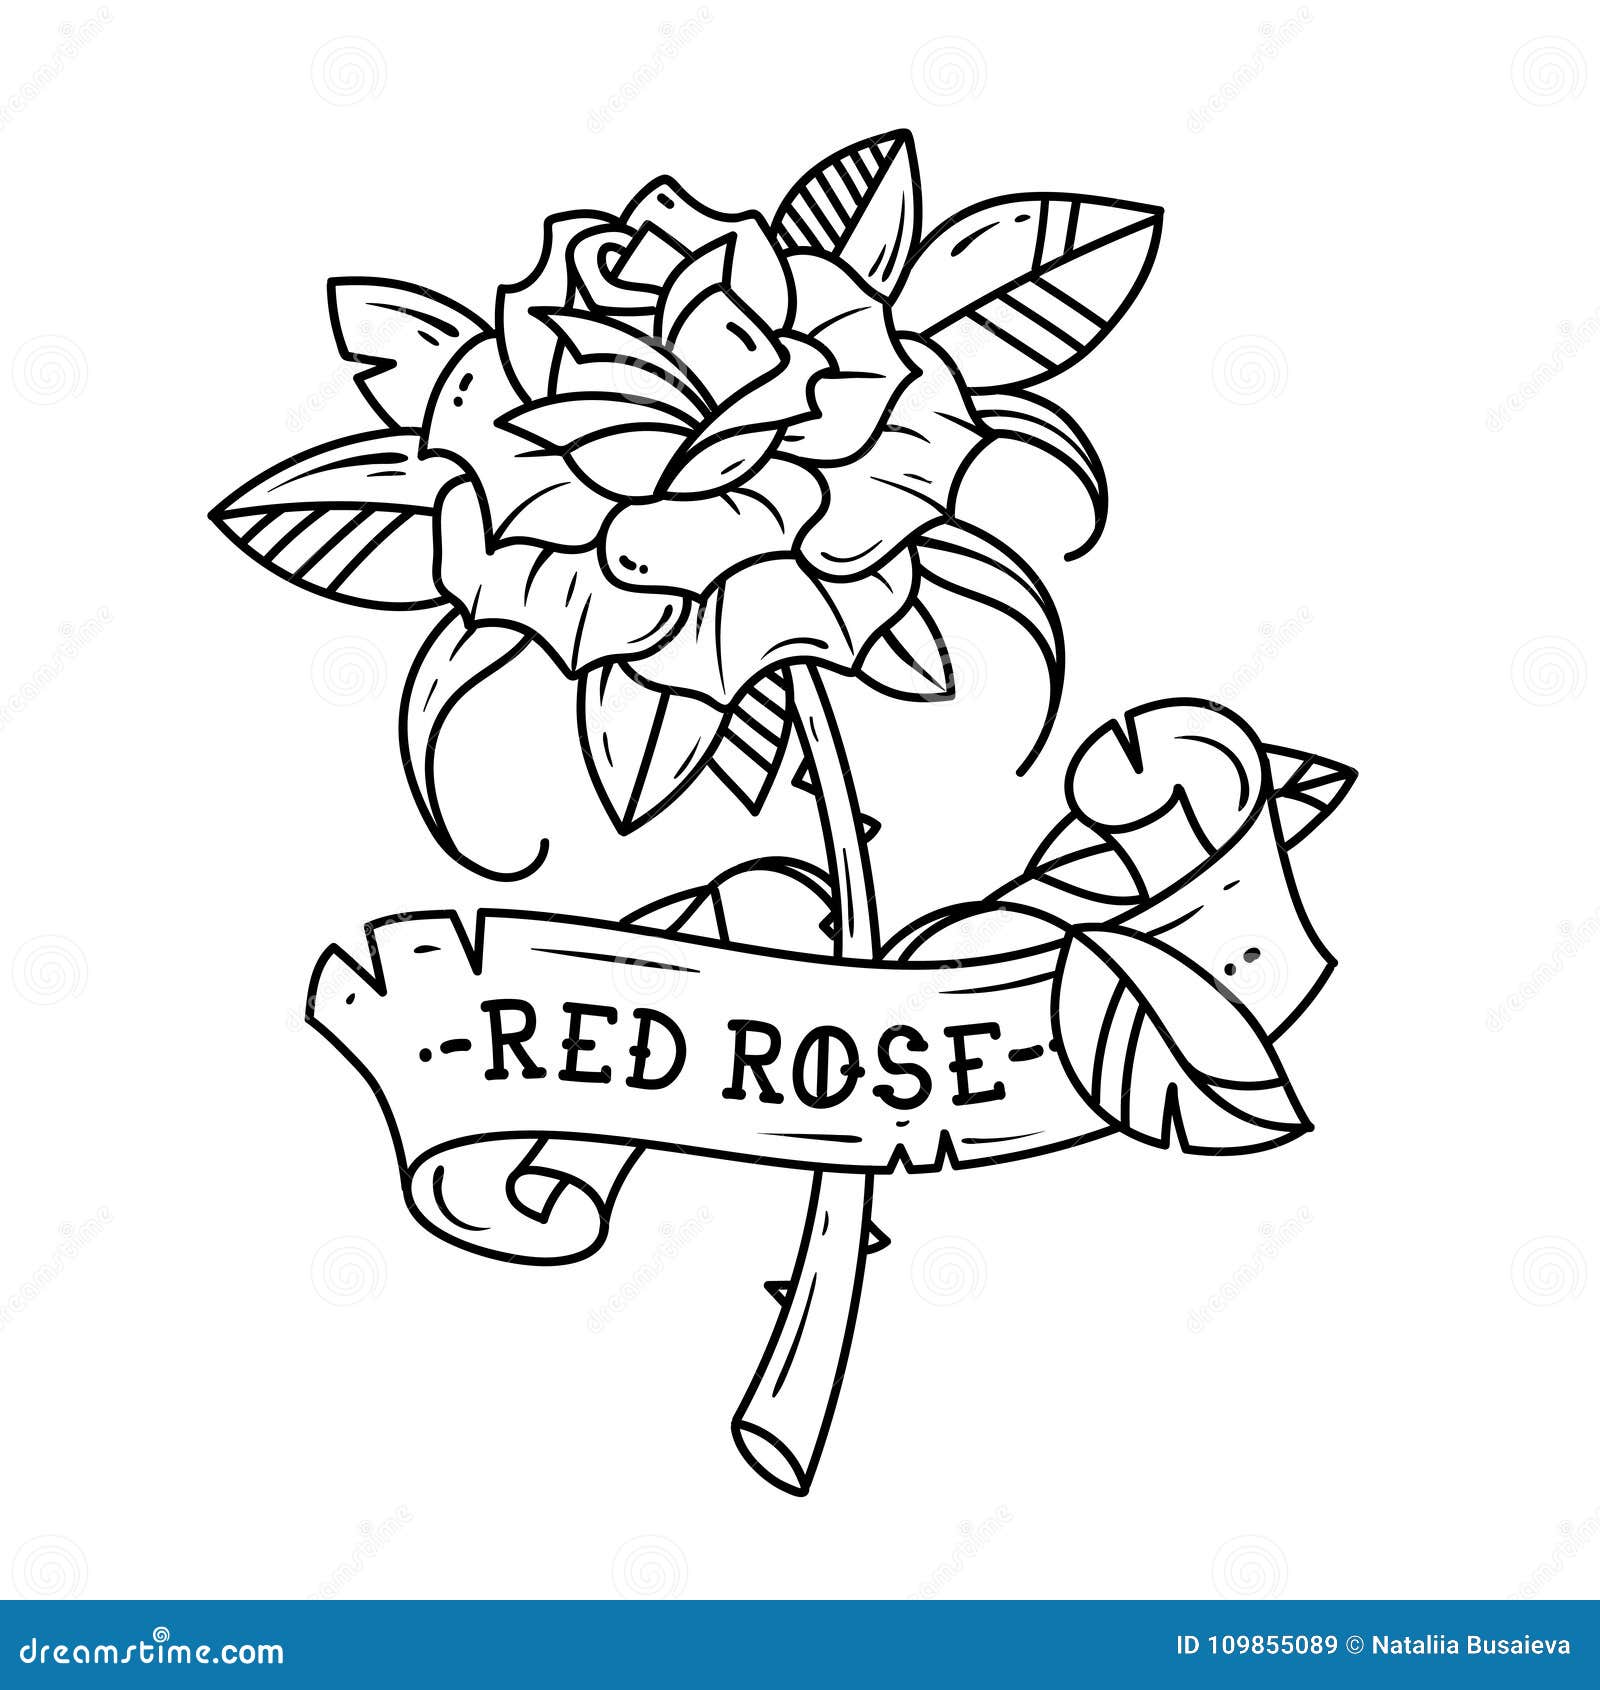 Vintage Rose Vignette Stock Illustration  Download Image Now  Ribbon   Sewing Item Tattoo Rose  Flower  iStock